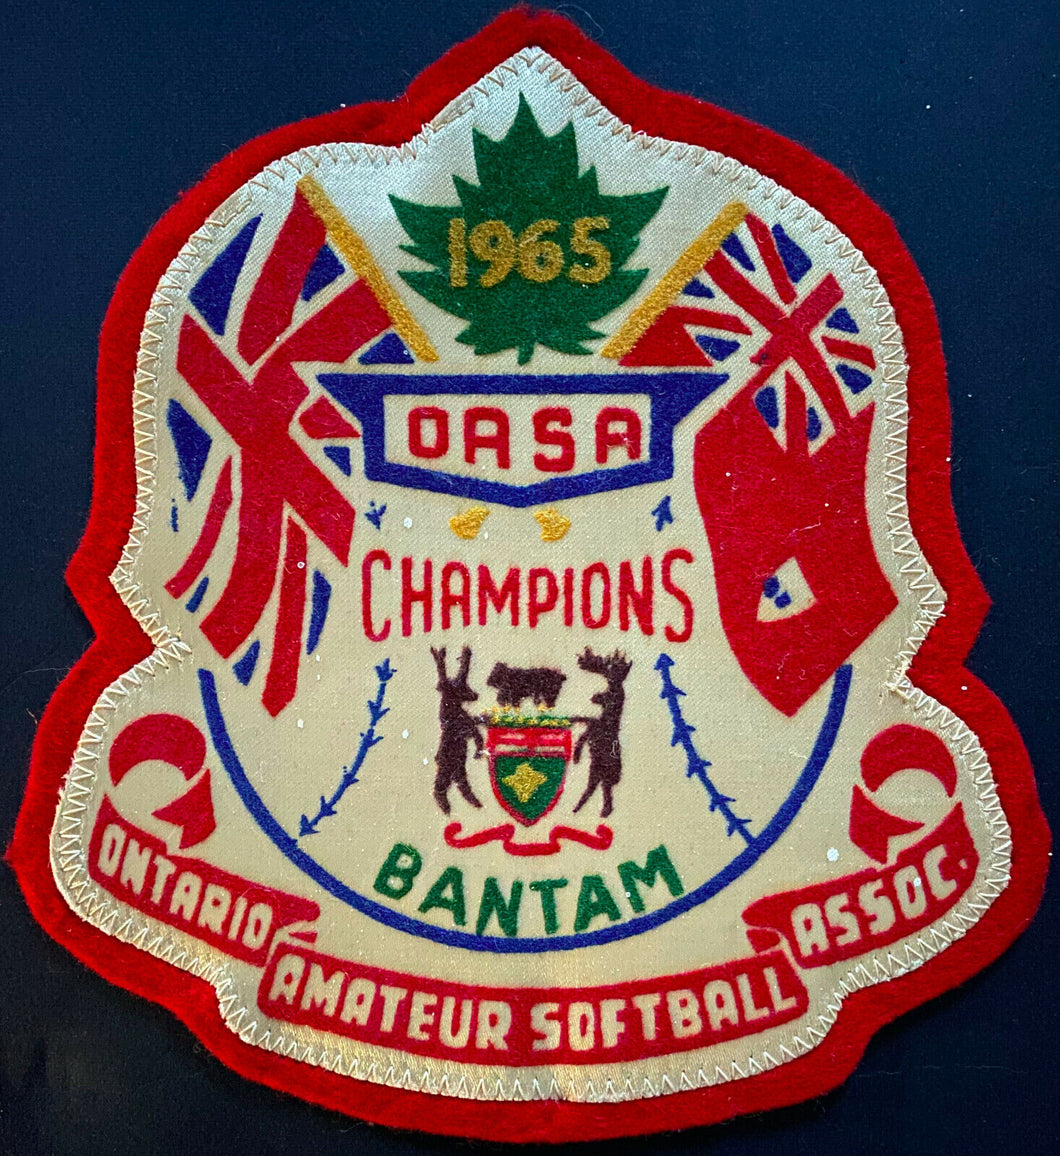 1965 Ontario Softball Champions Vintage Patch Unused Bantam OASA Crest Old